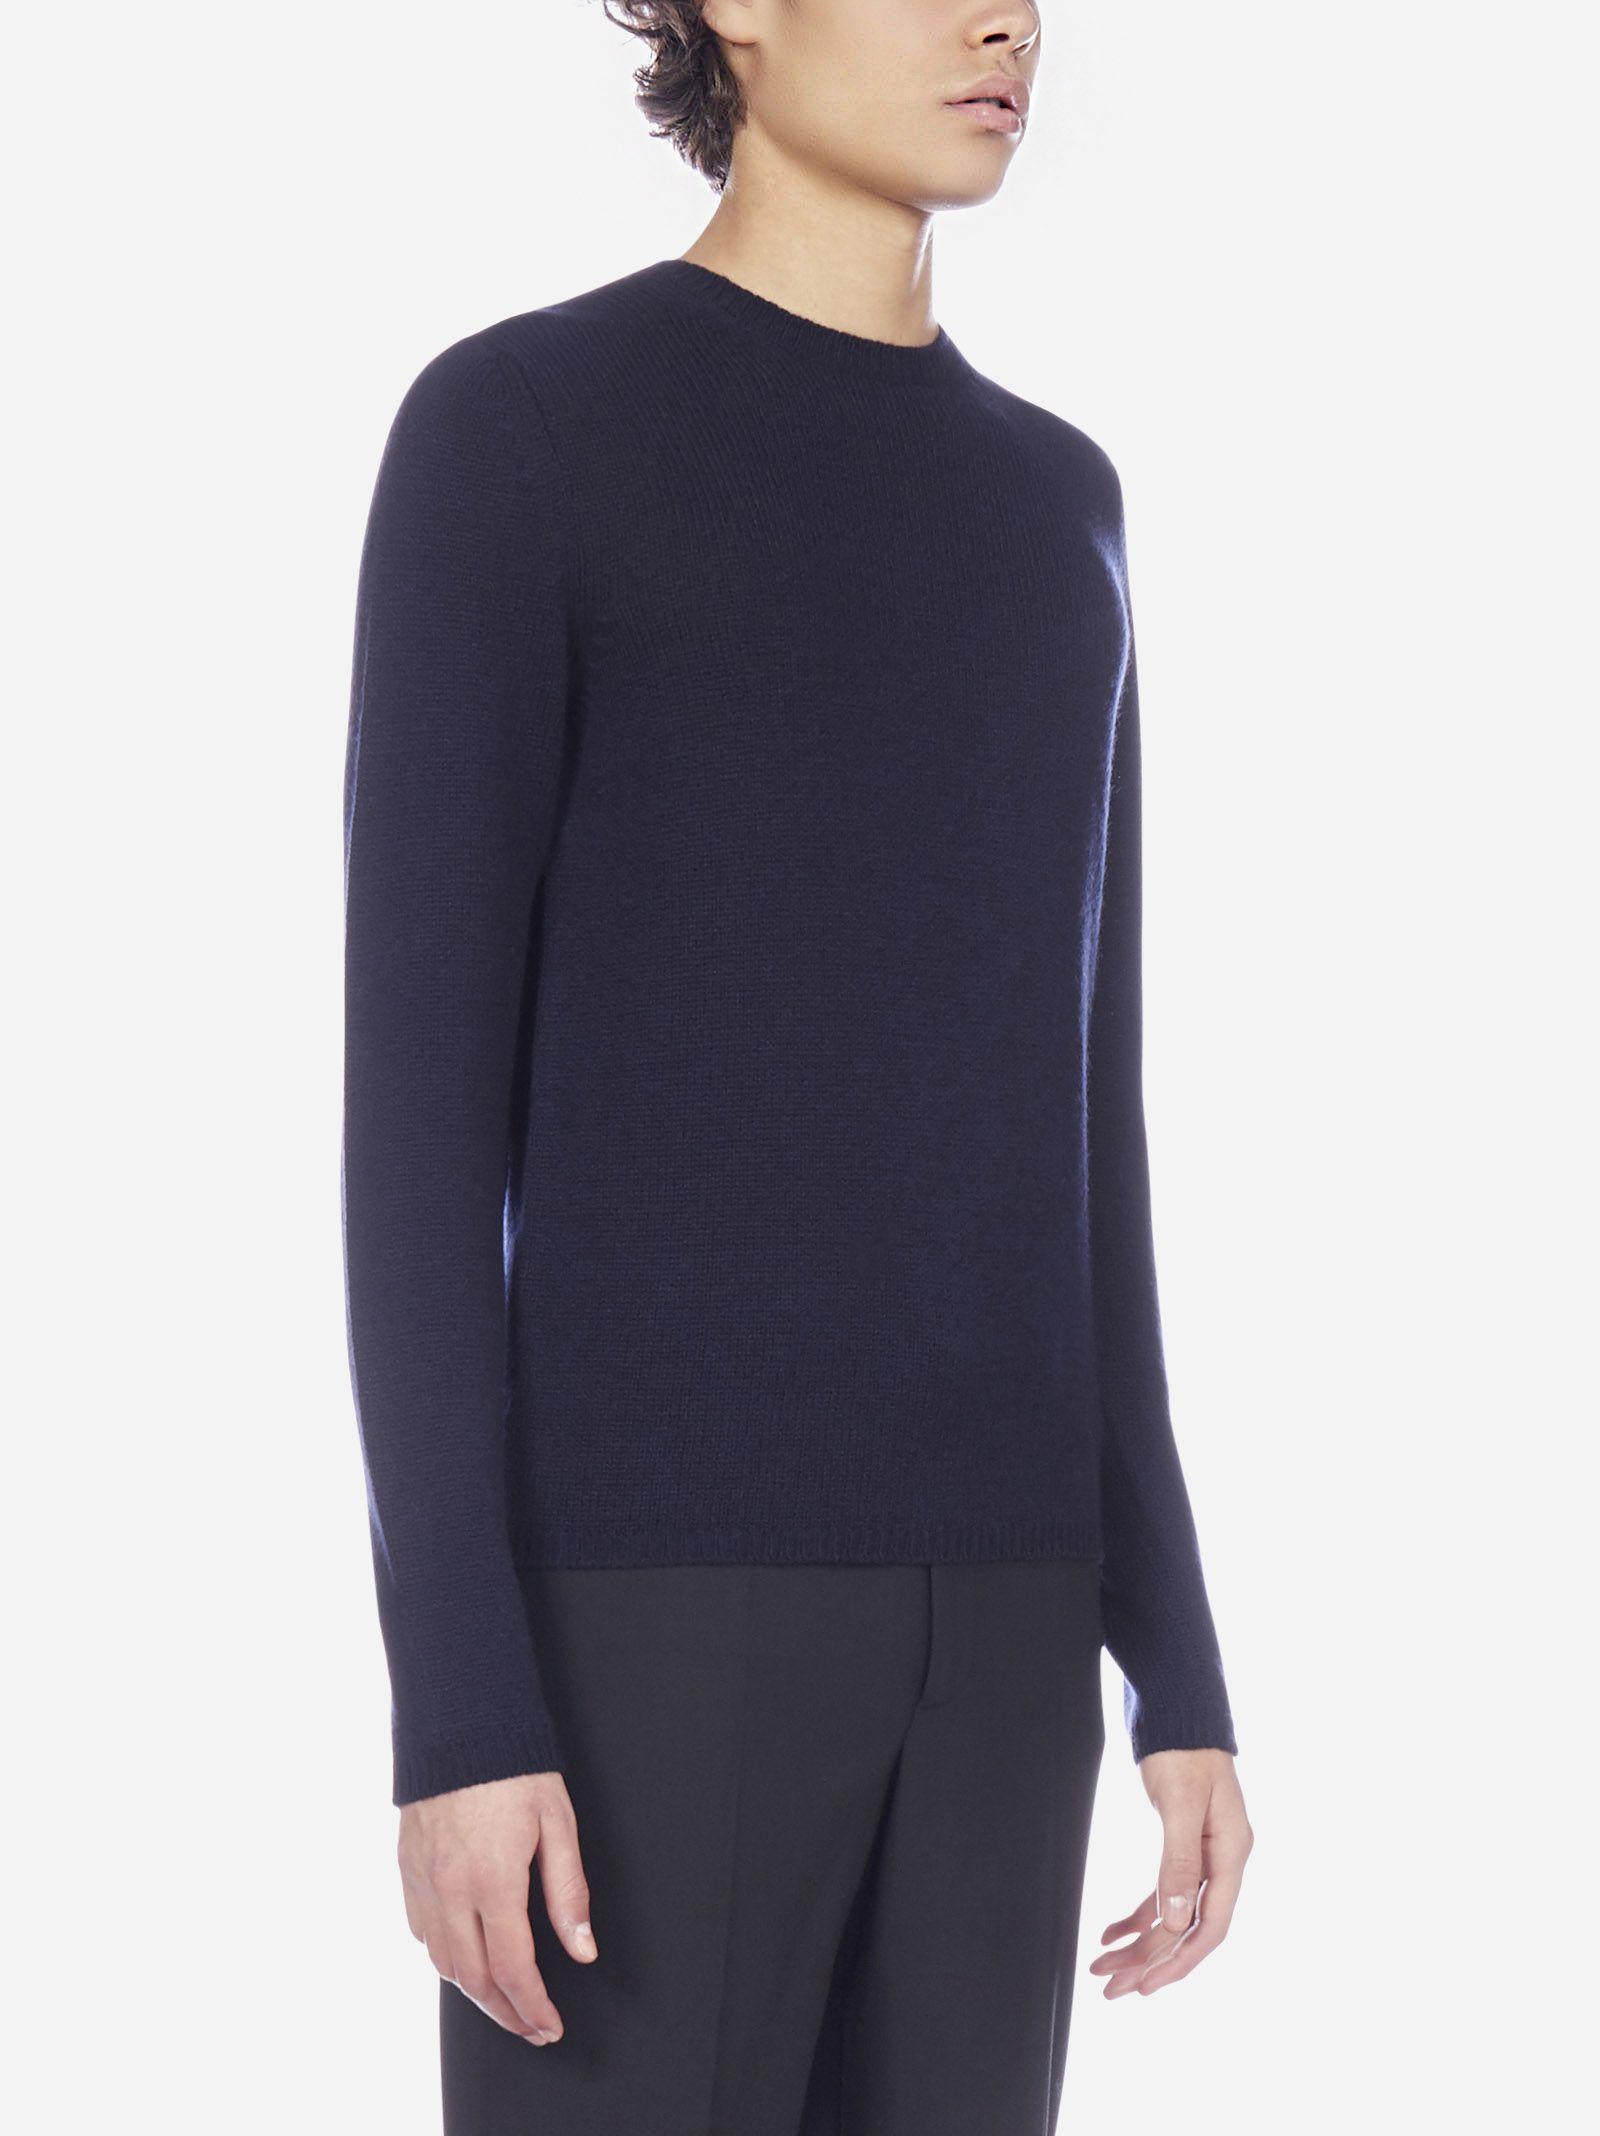 Prada Cashmere Sweater in Blue for Men - Lyst